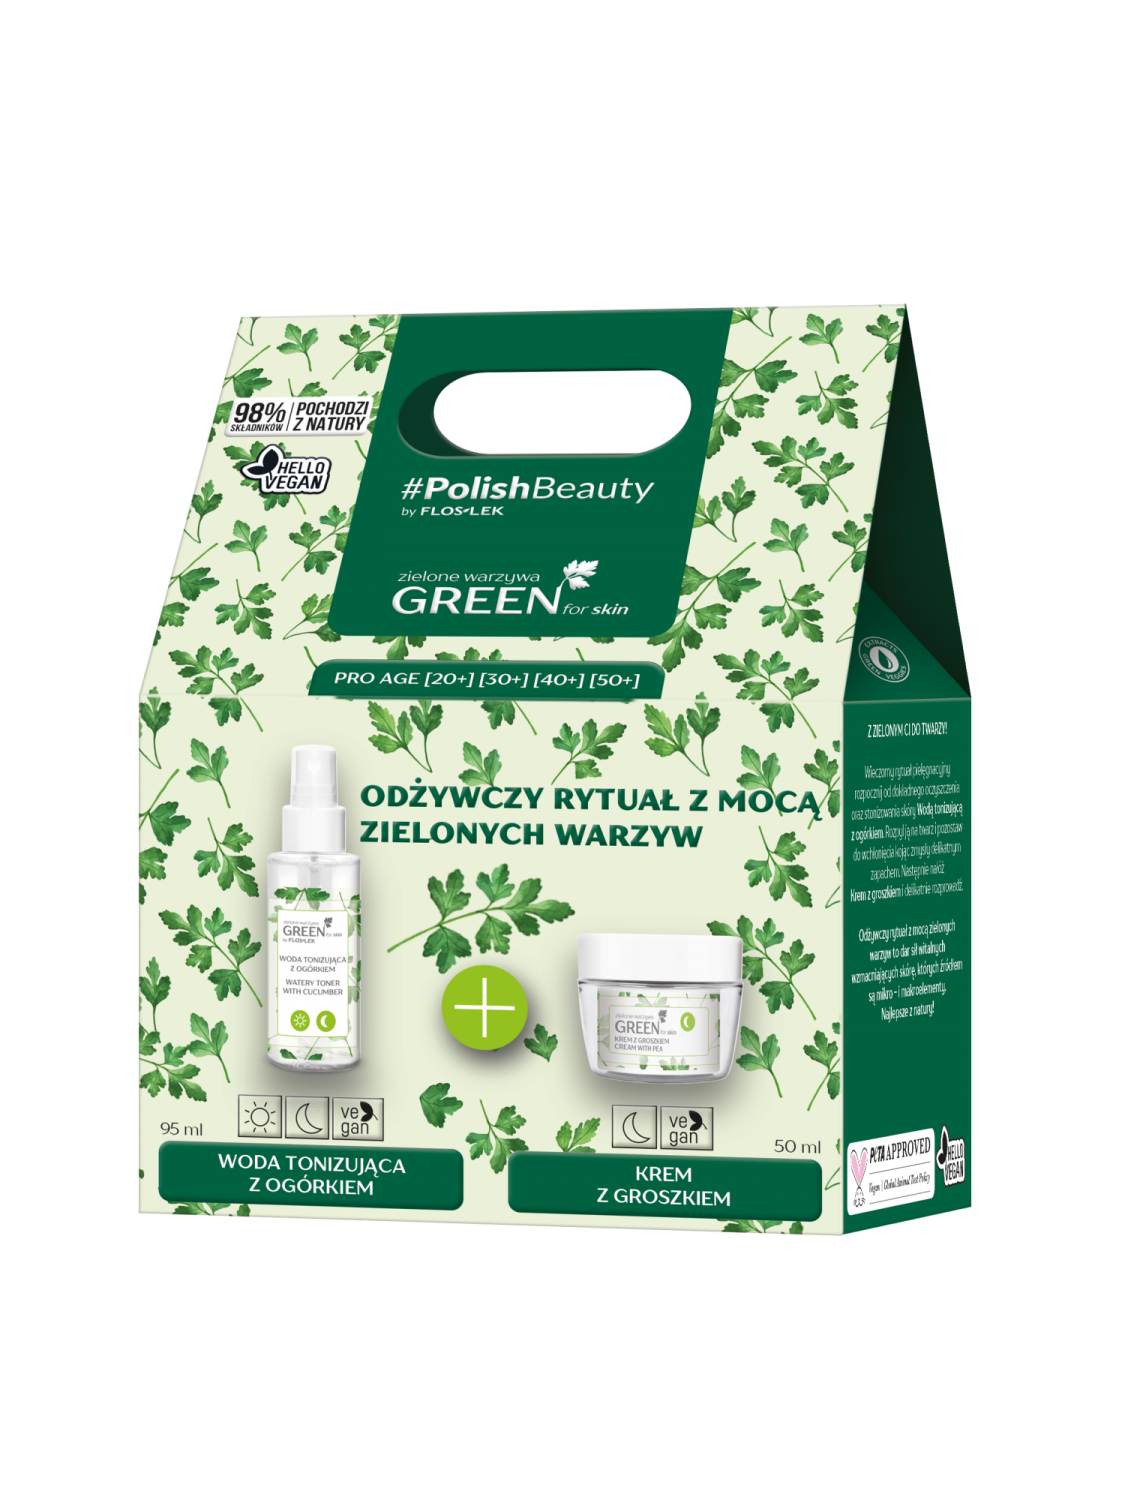 GREEN for skin PRO AGE care kit Floslek